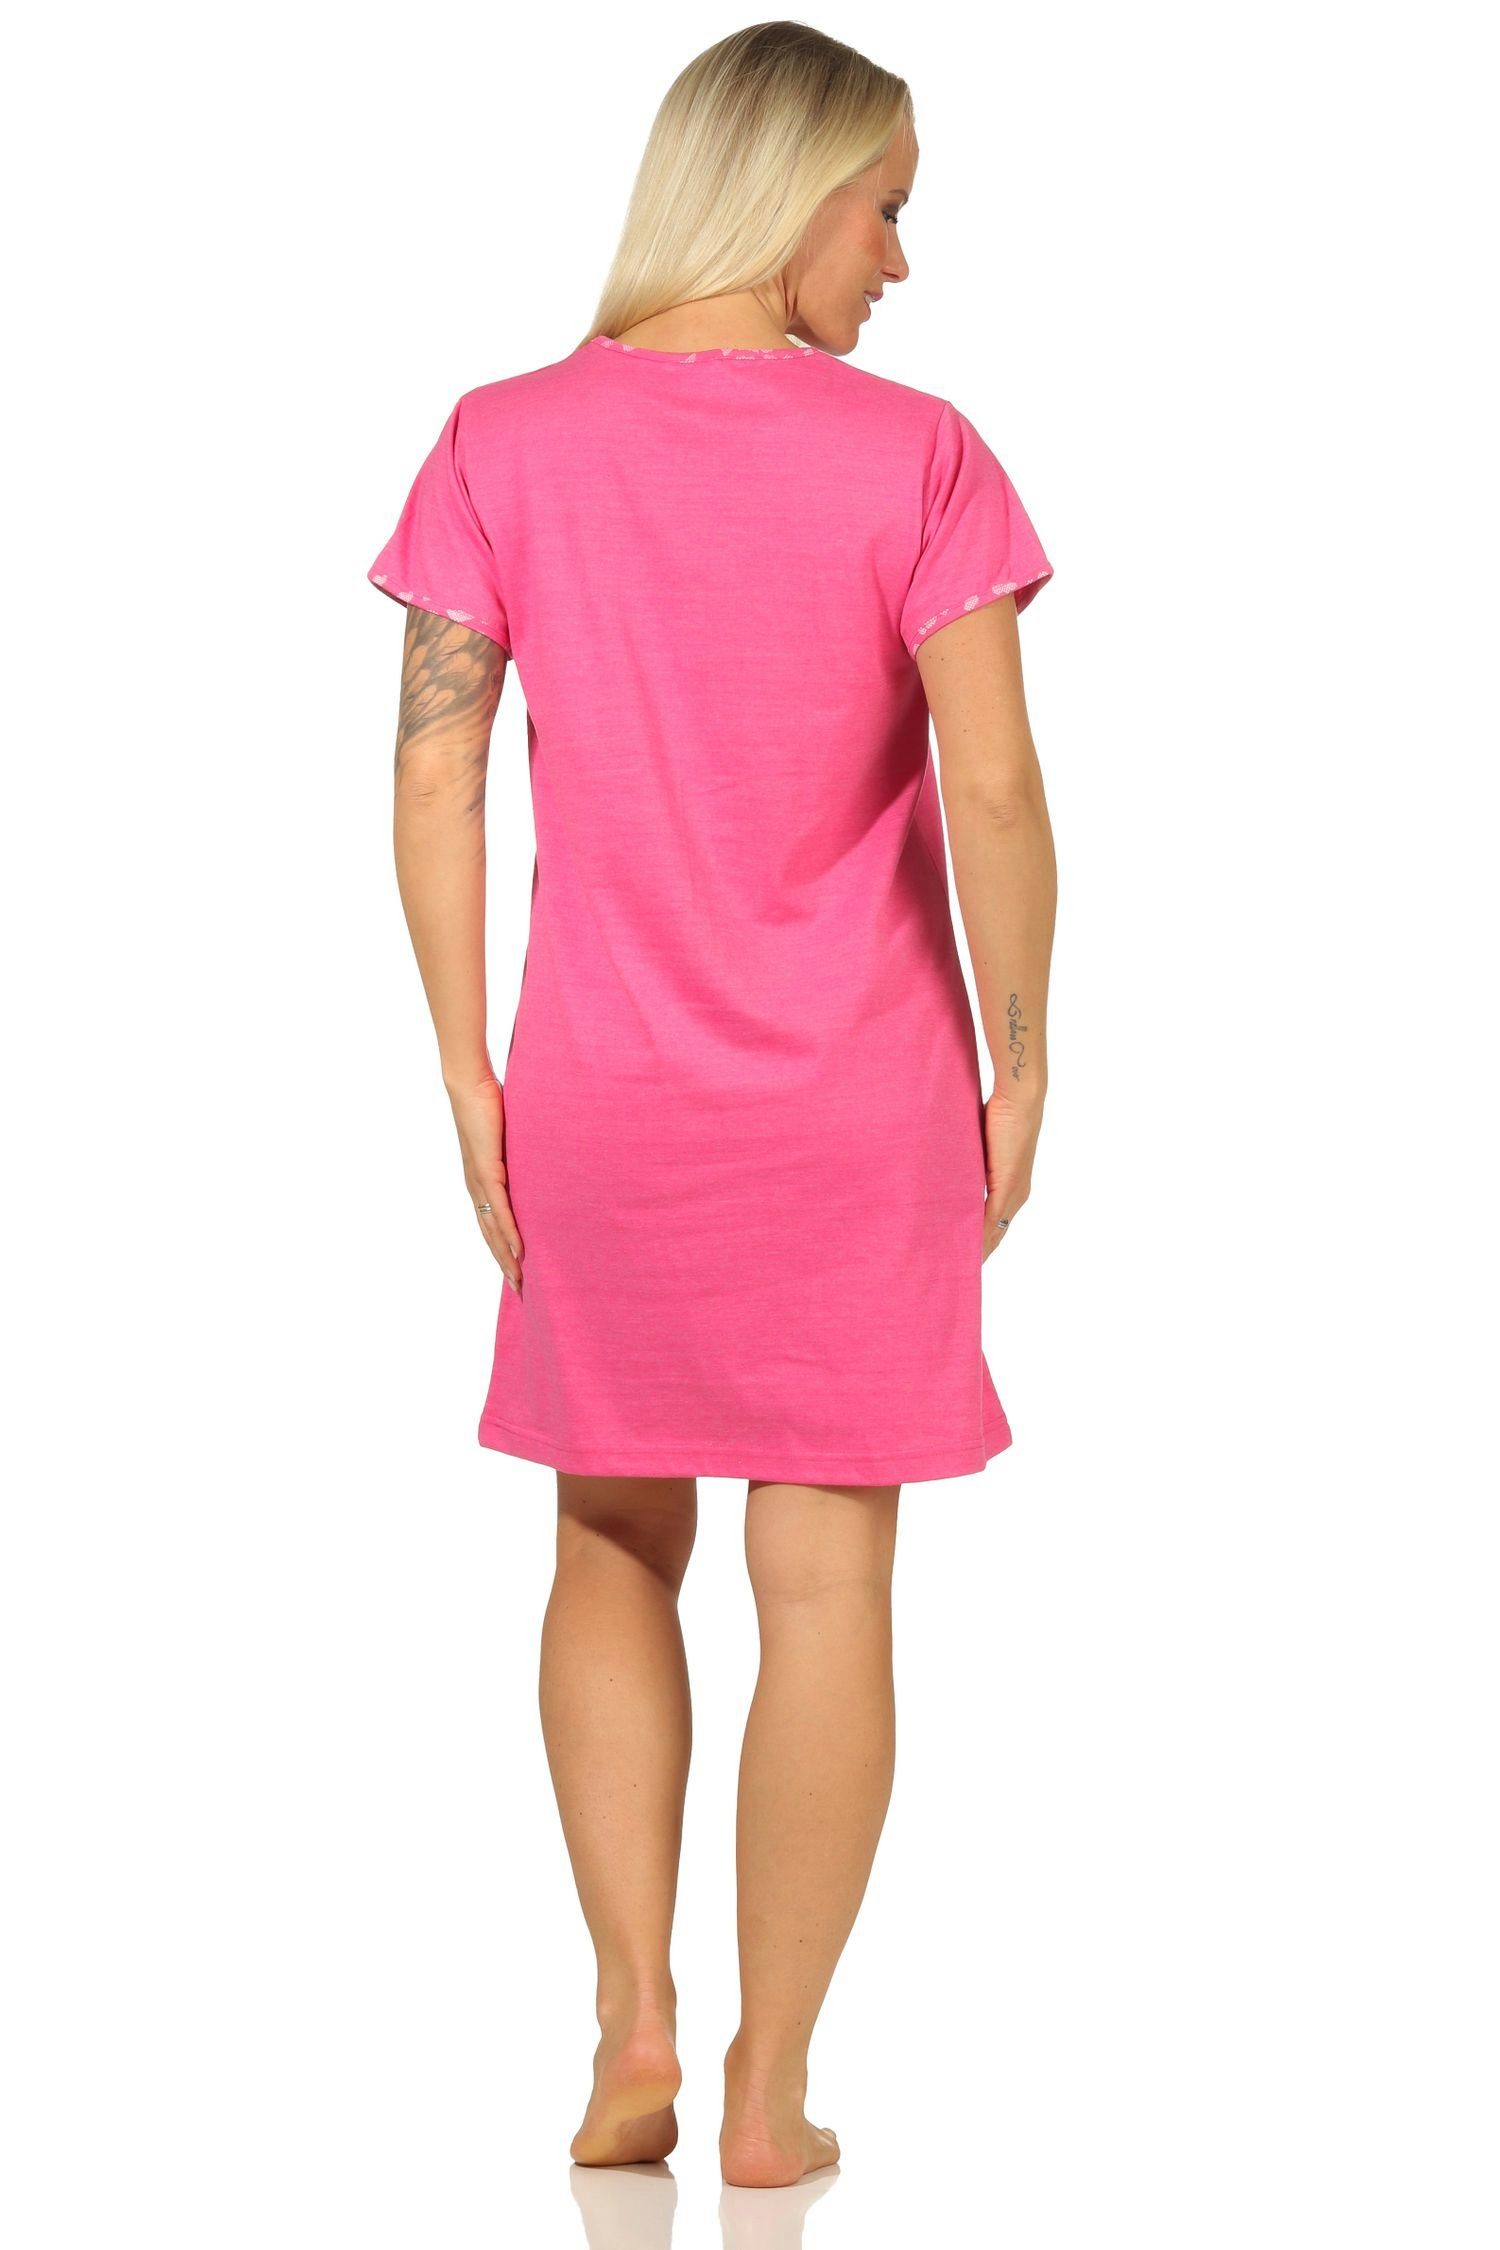 RELAX by pink kurzarm Nachthemd 67140 Normann Damen tollem mit - Nachthemd Motiv